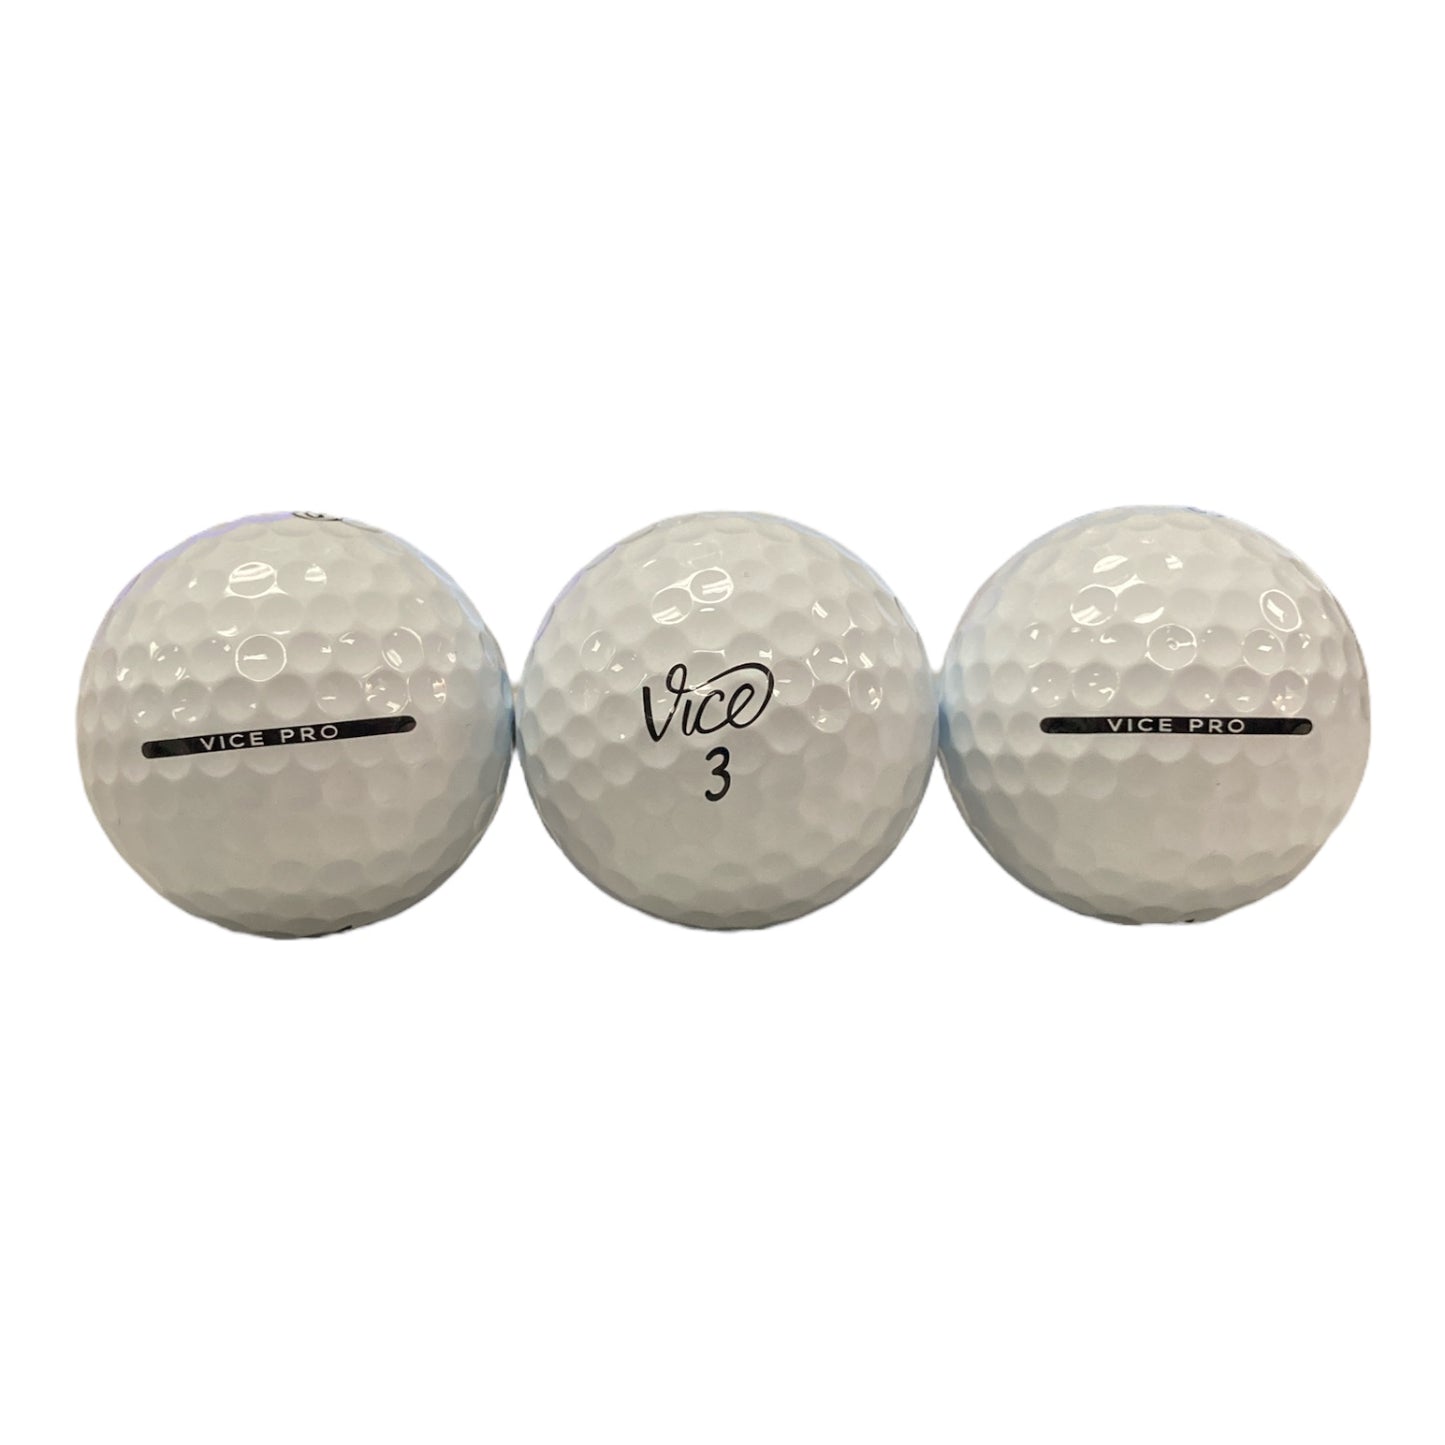 Vice Golf Pro White 3-Piece Urethane Golf Balls (3 Count)